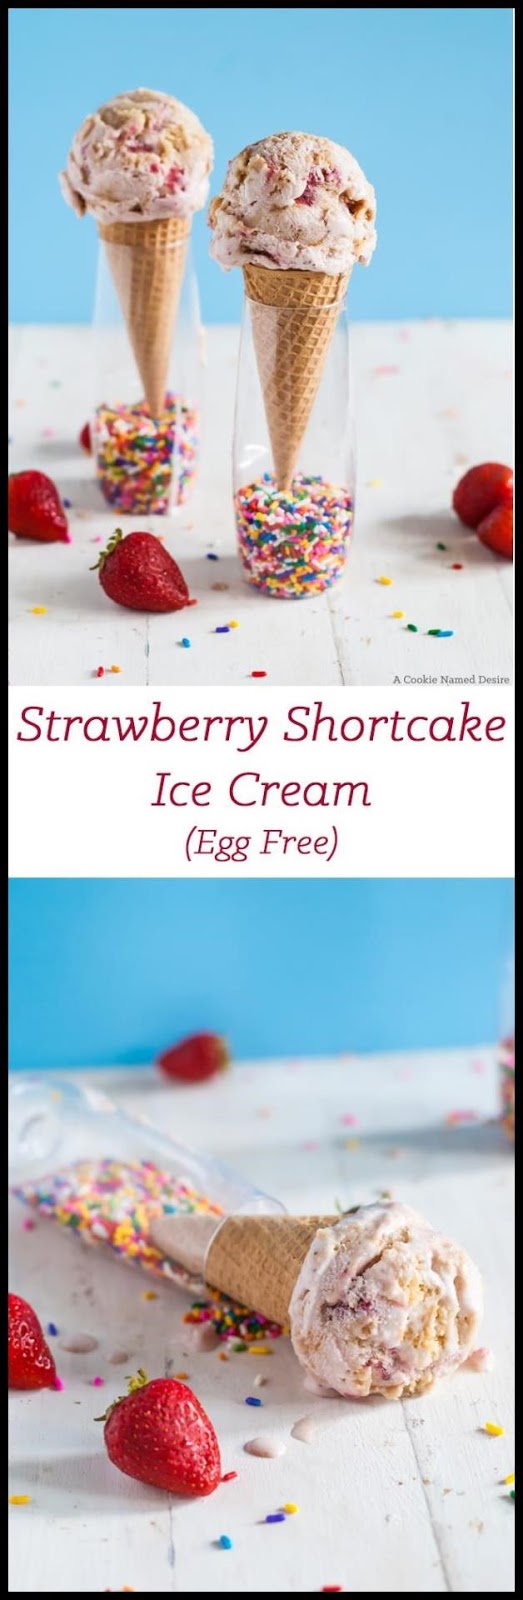 16 Strawberry Shortcake Kitchen Set Strawberry Shortcake Ice Cream A Cookie Named Desire Strawberry,Shortcake,Kitchen,Set